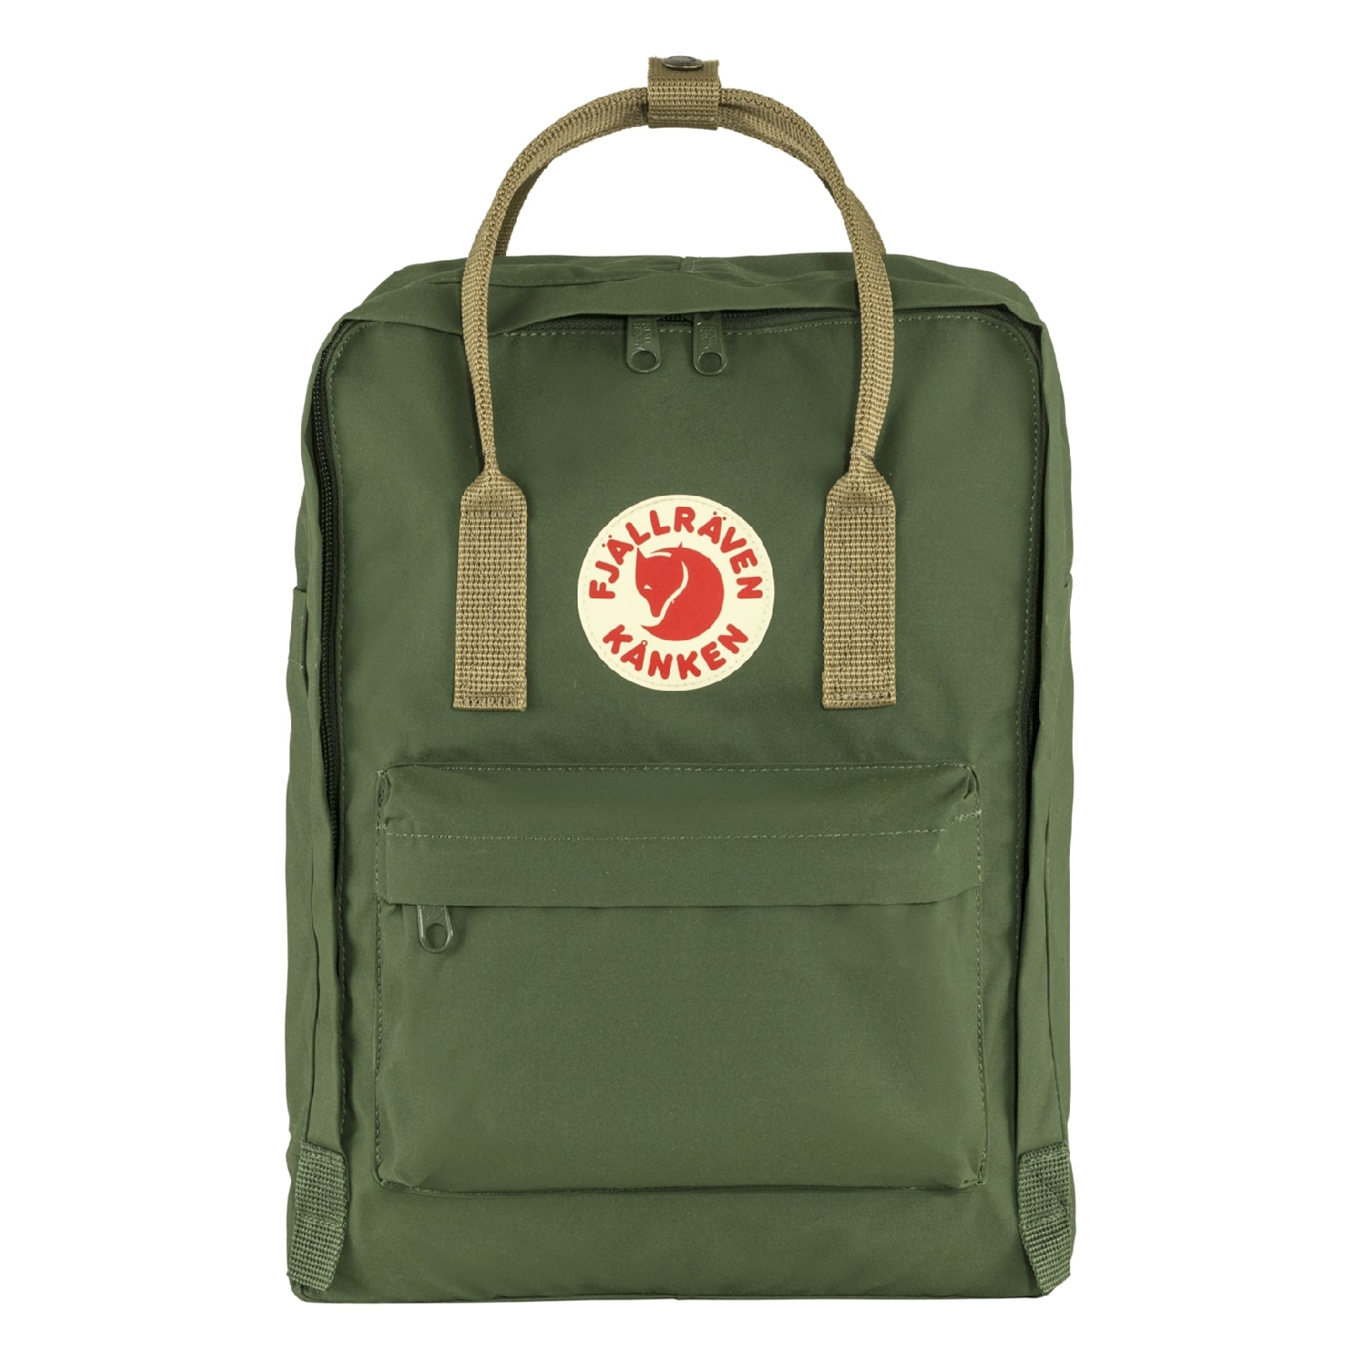 Fjallraven Kanken Rugzak spruce green/gray backpack